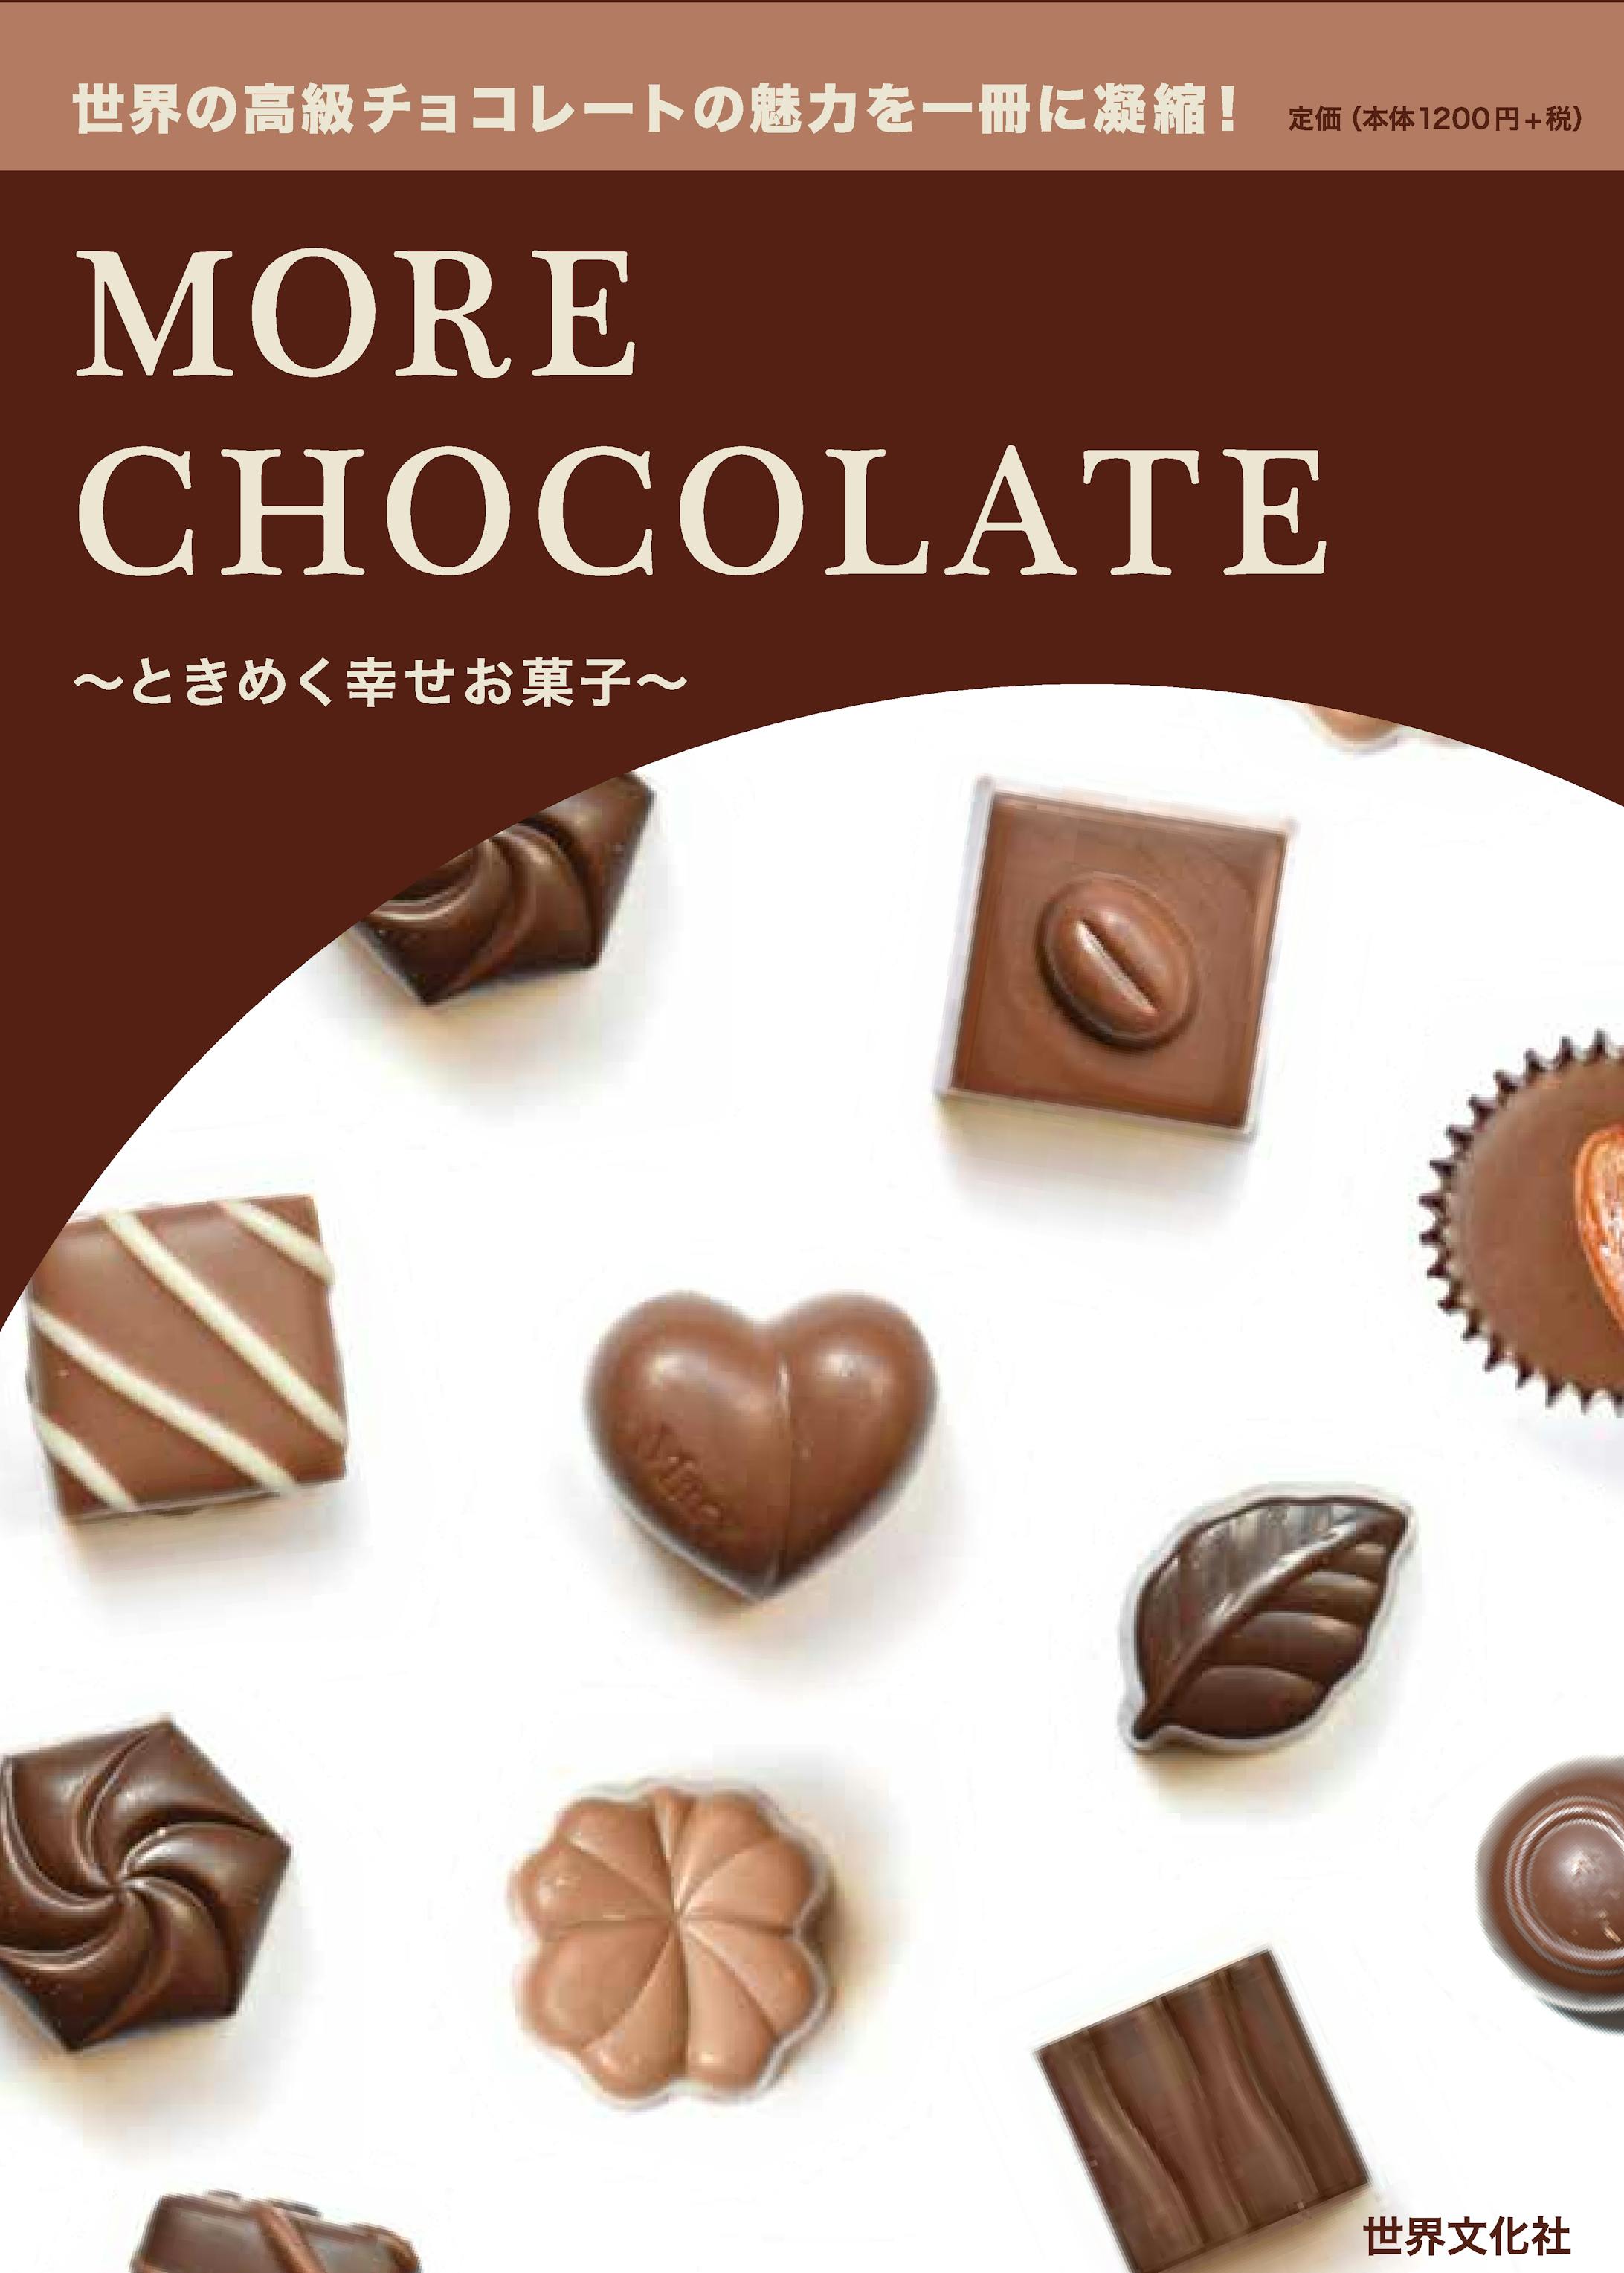 more chocolate-3